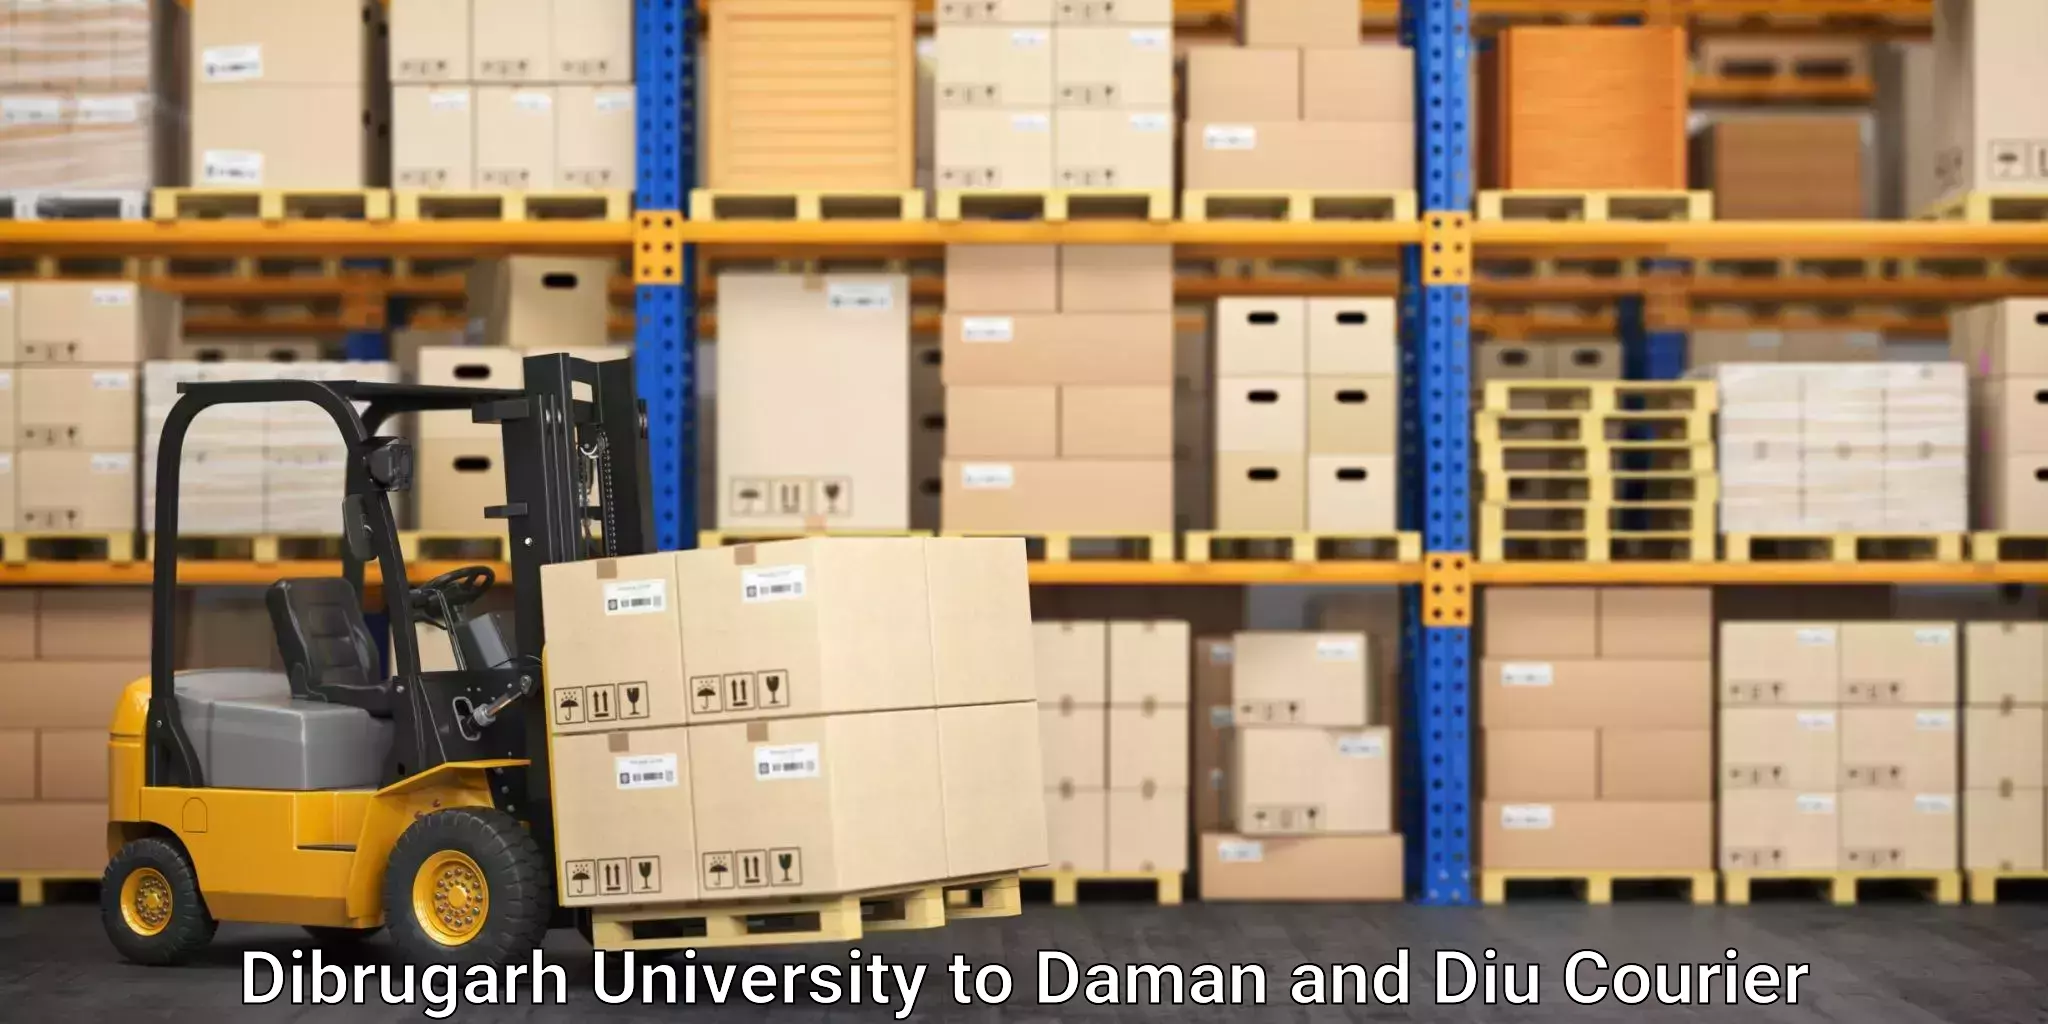 Courier service efficiency Dibrugarh University to Diu